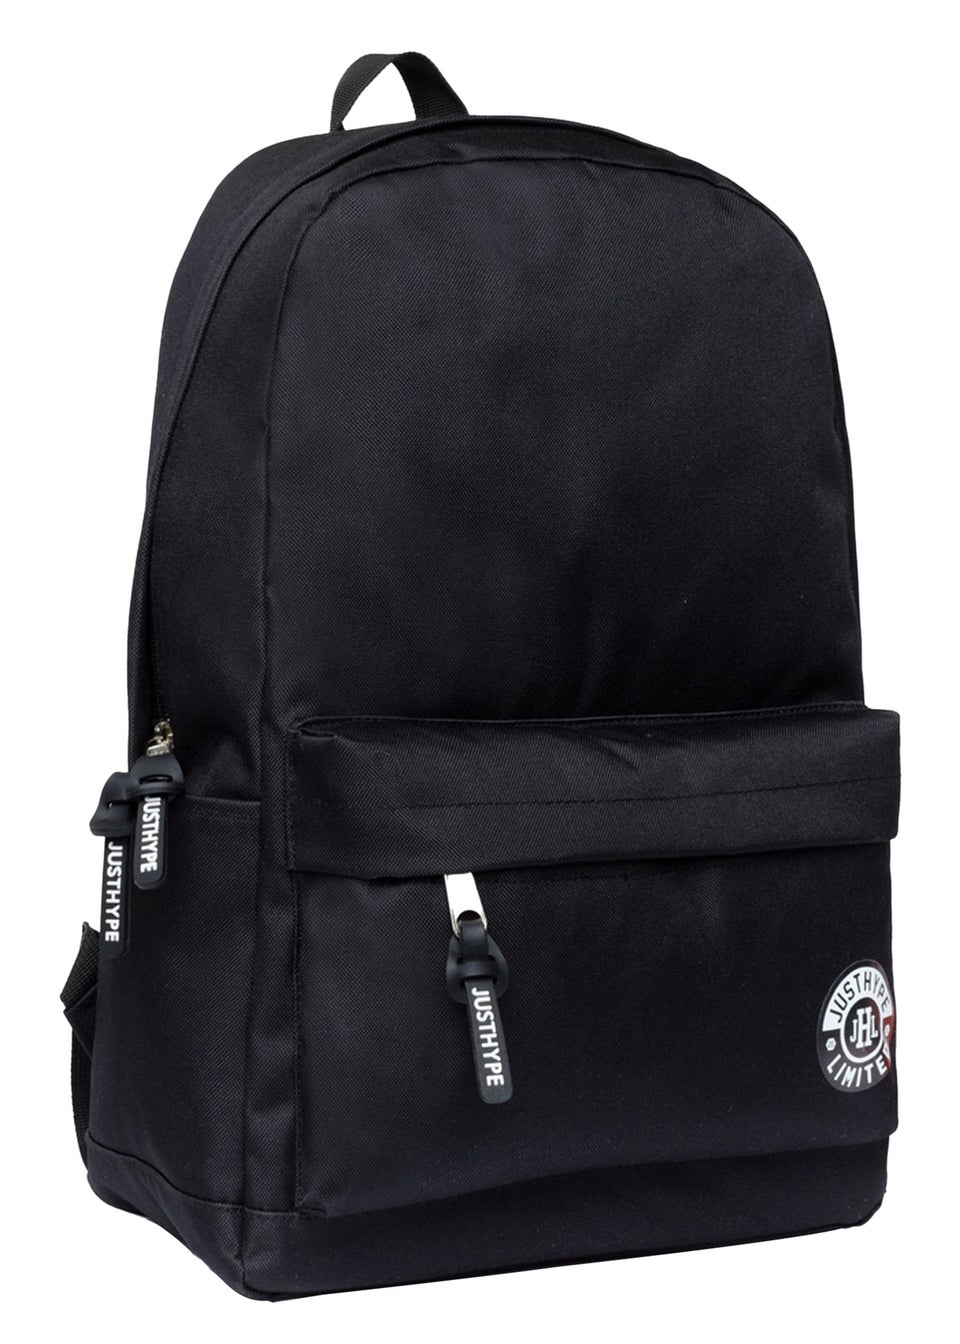 Hype Black Entry Backpack